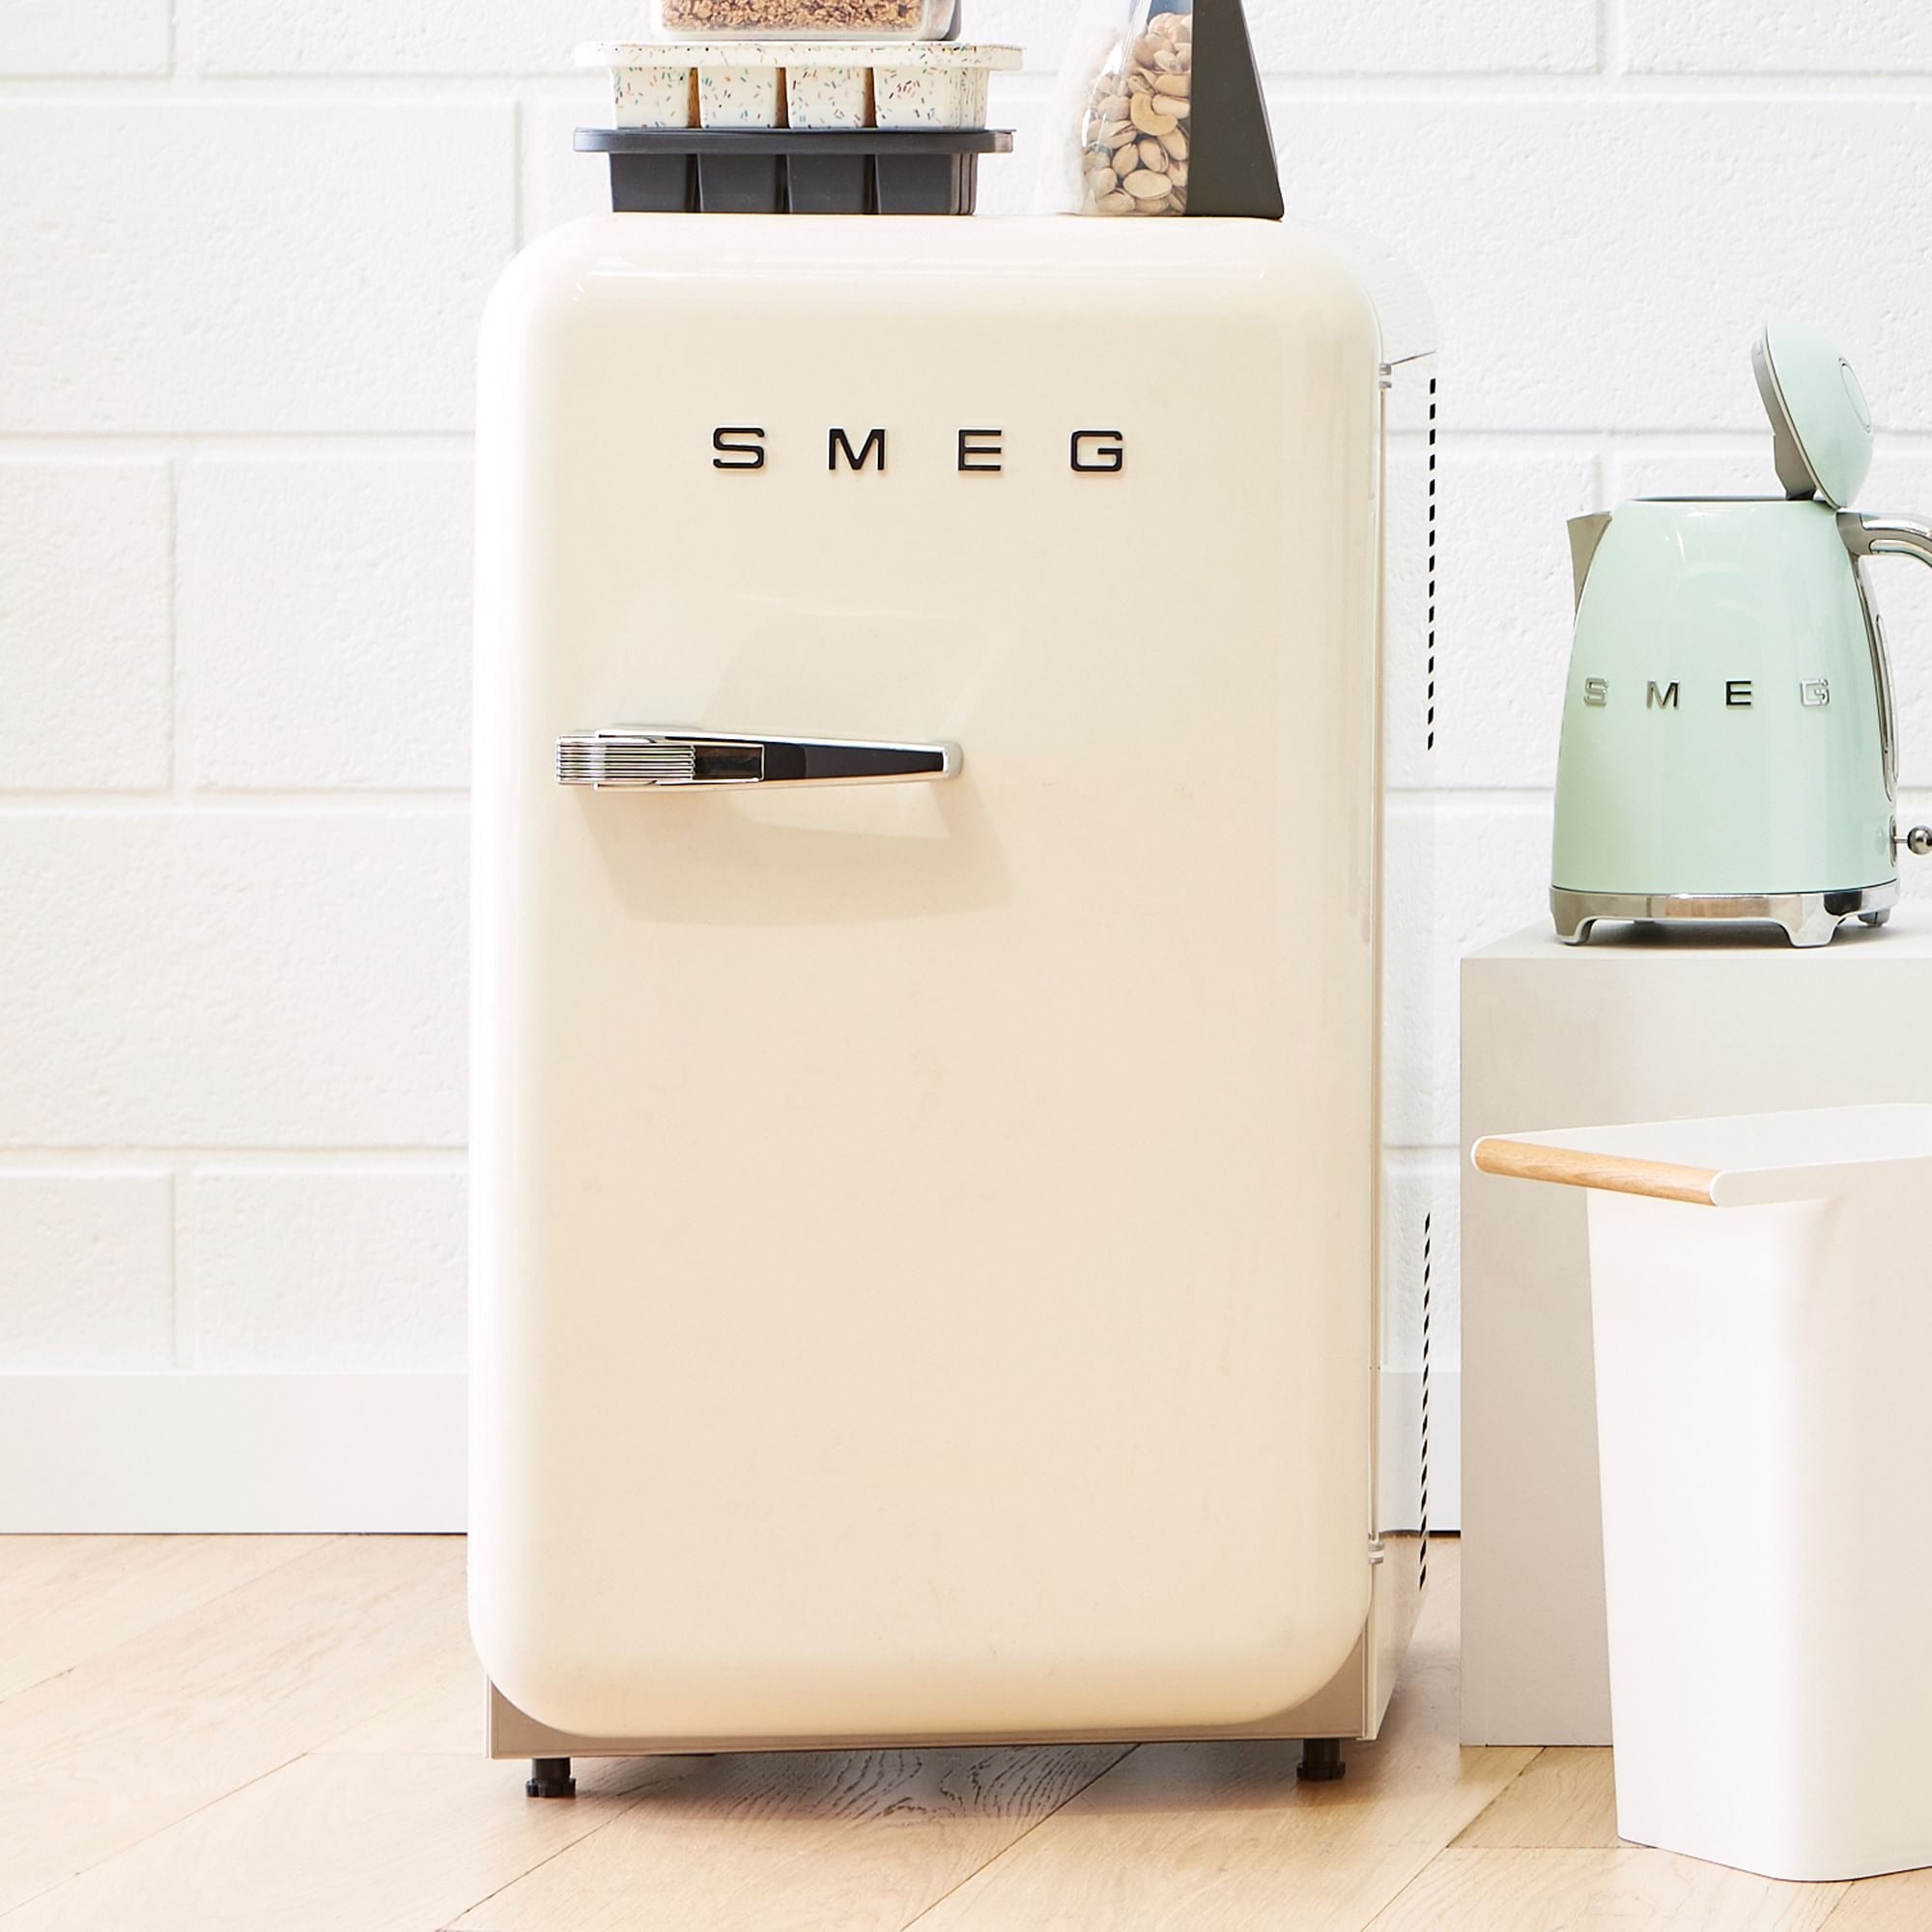 Are Retro Refrigerators Good Investments?